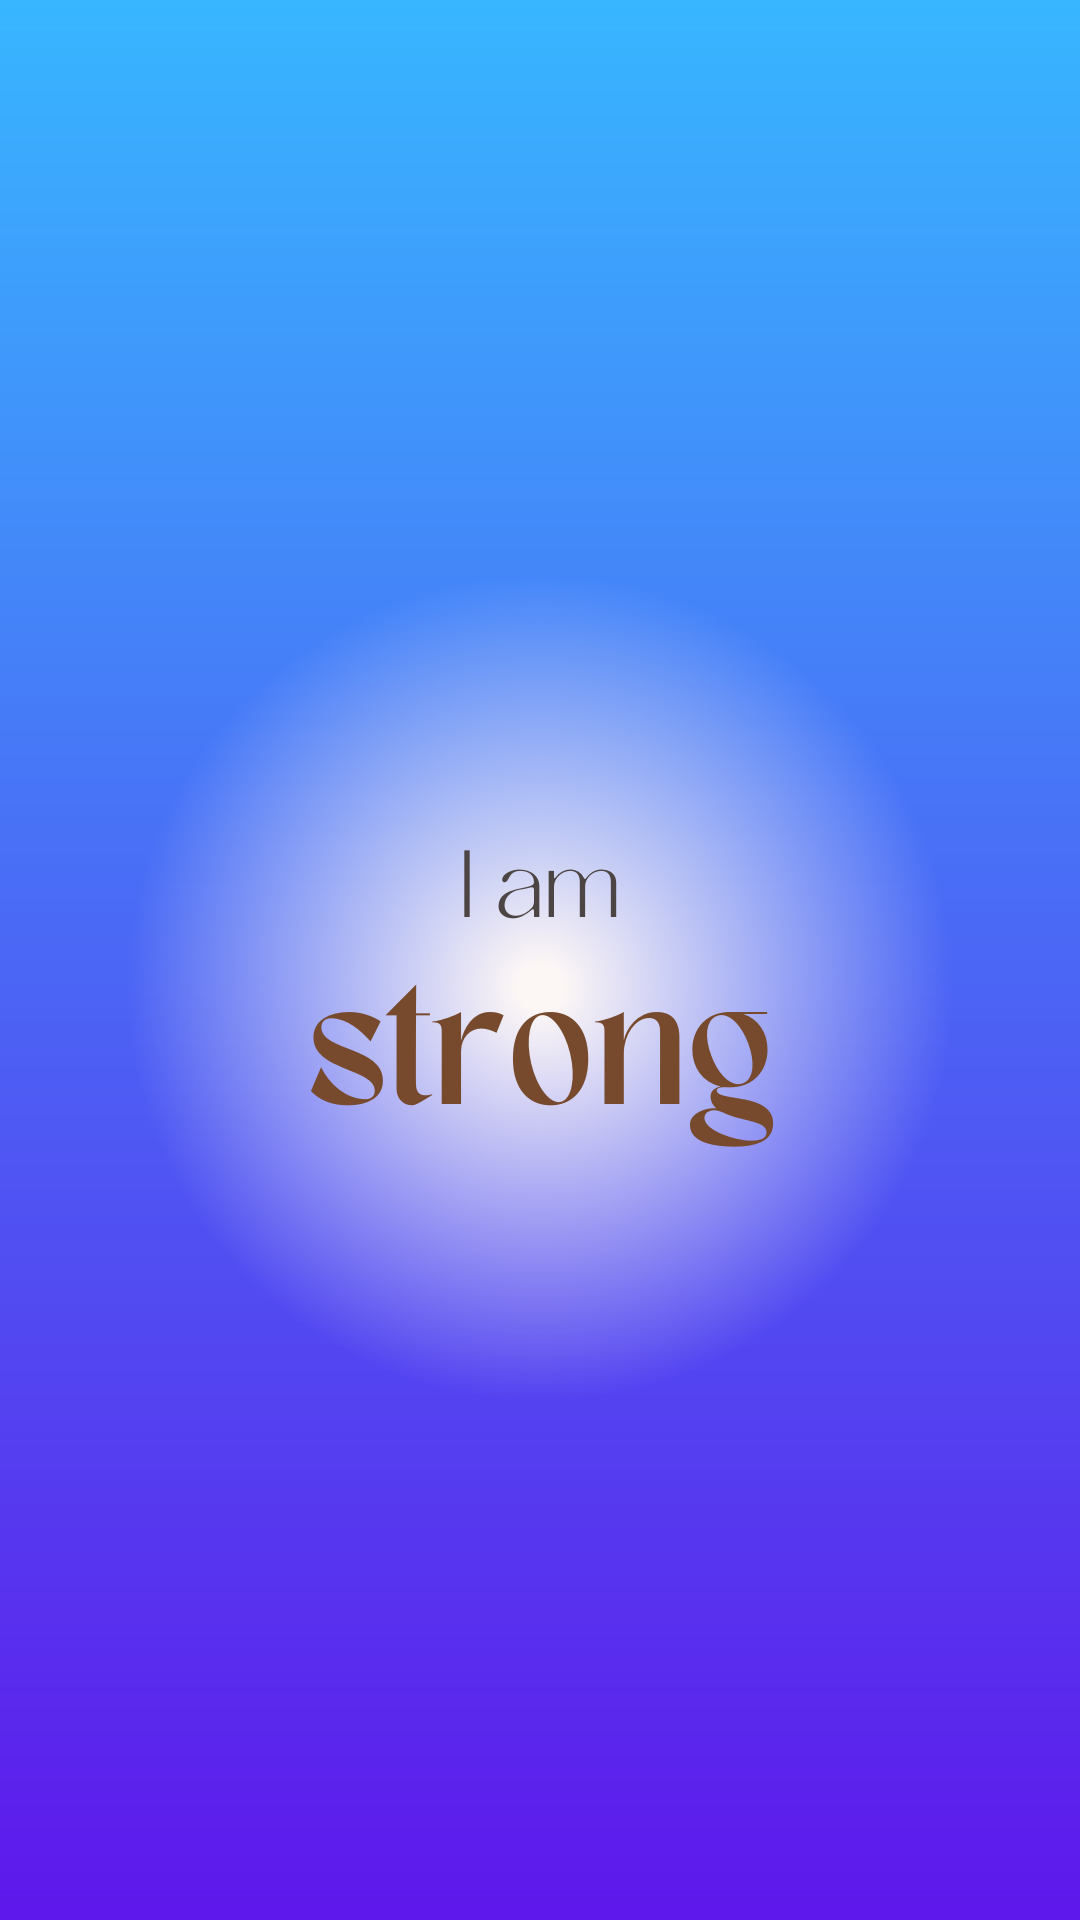 i am strong positive affirmation